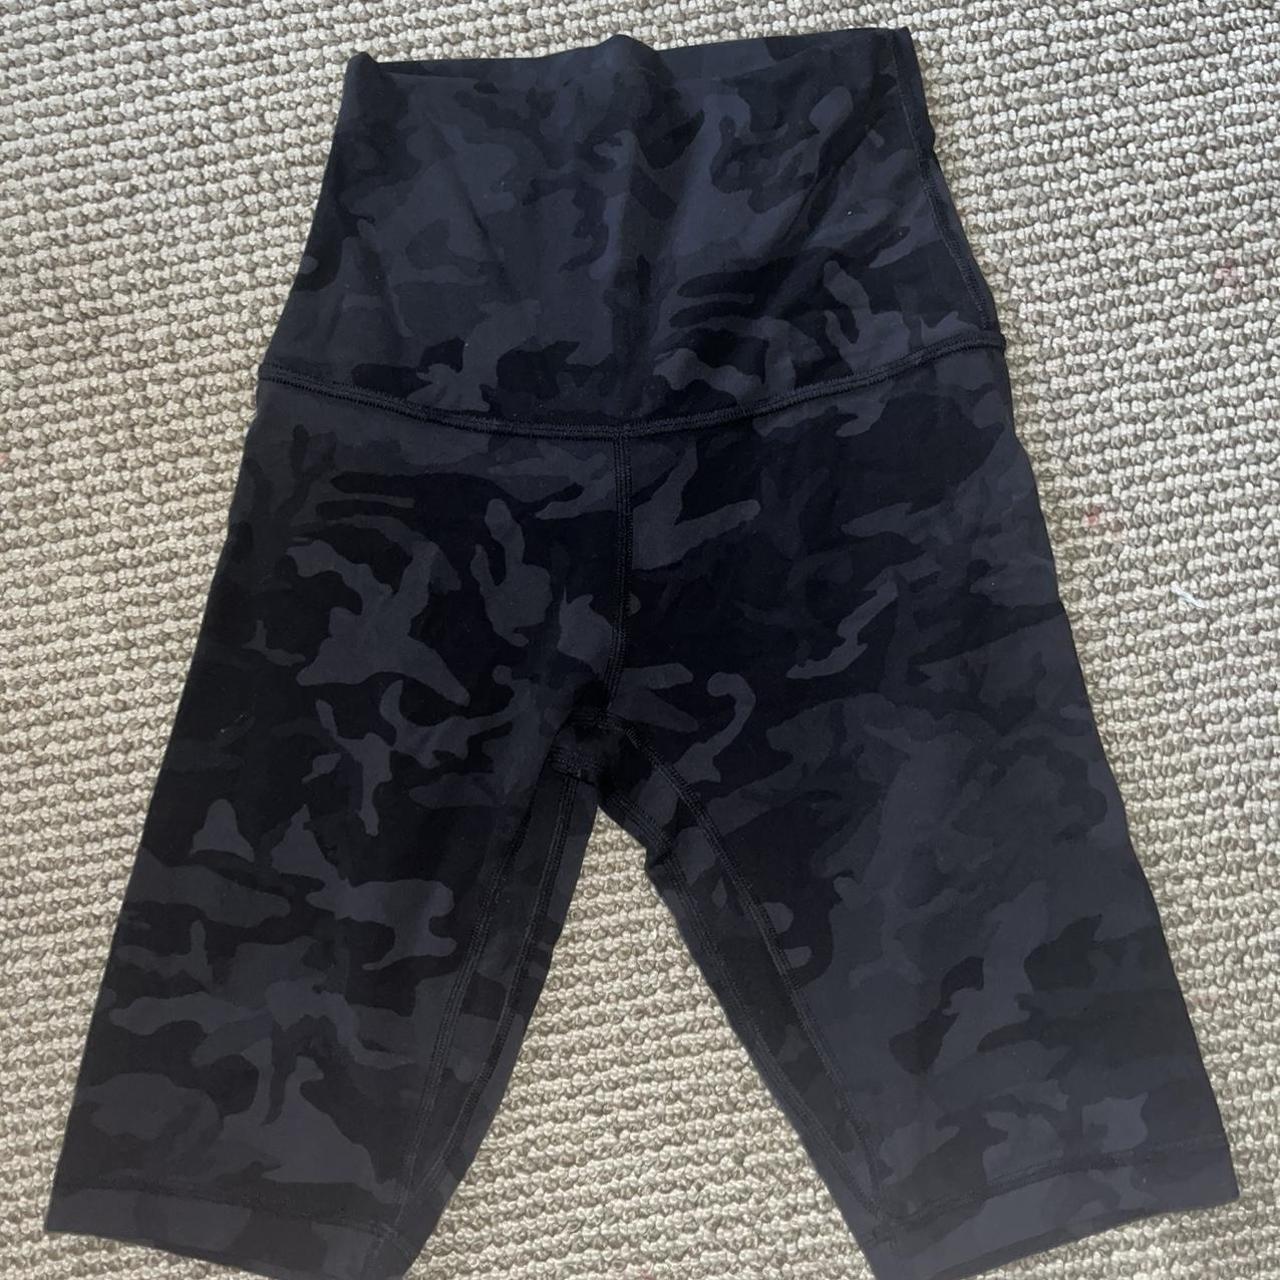 Black Align high-rise 8 shorts, lululemon